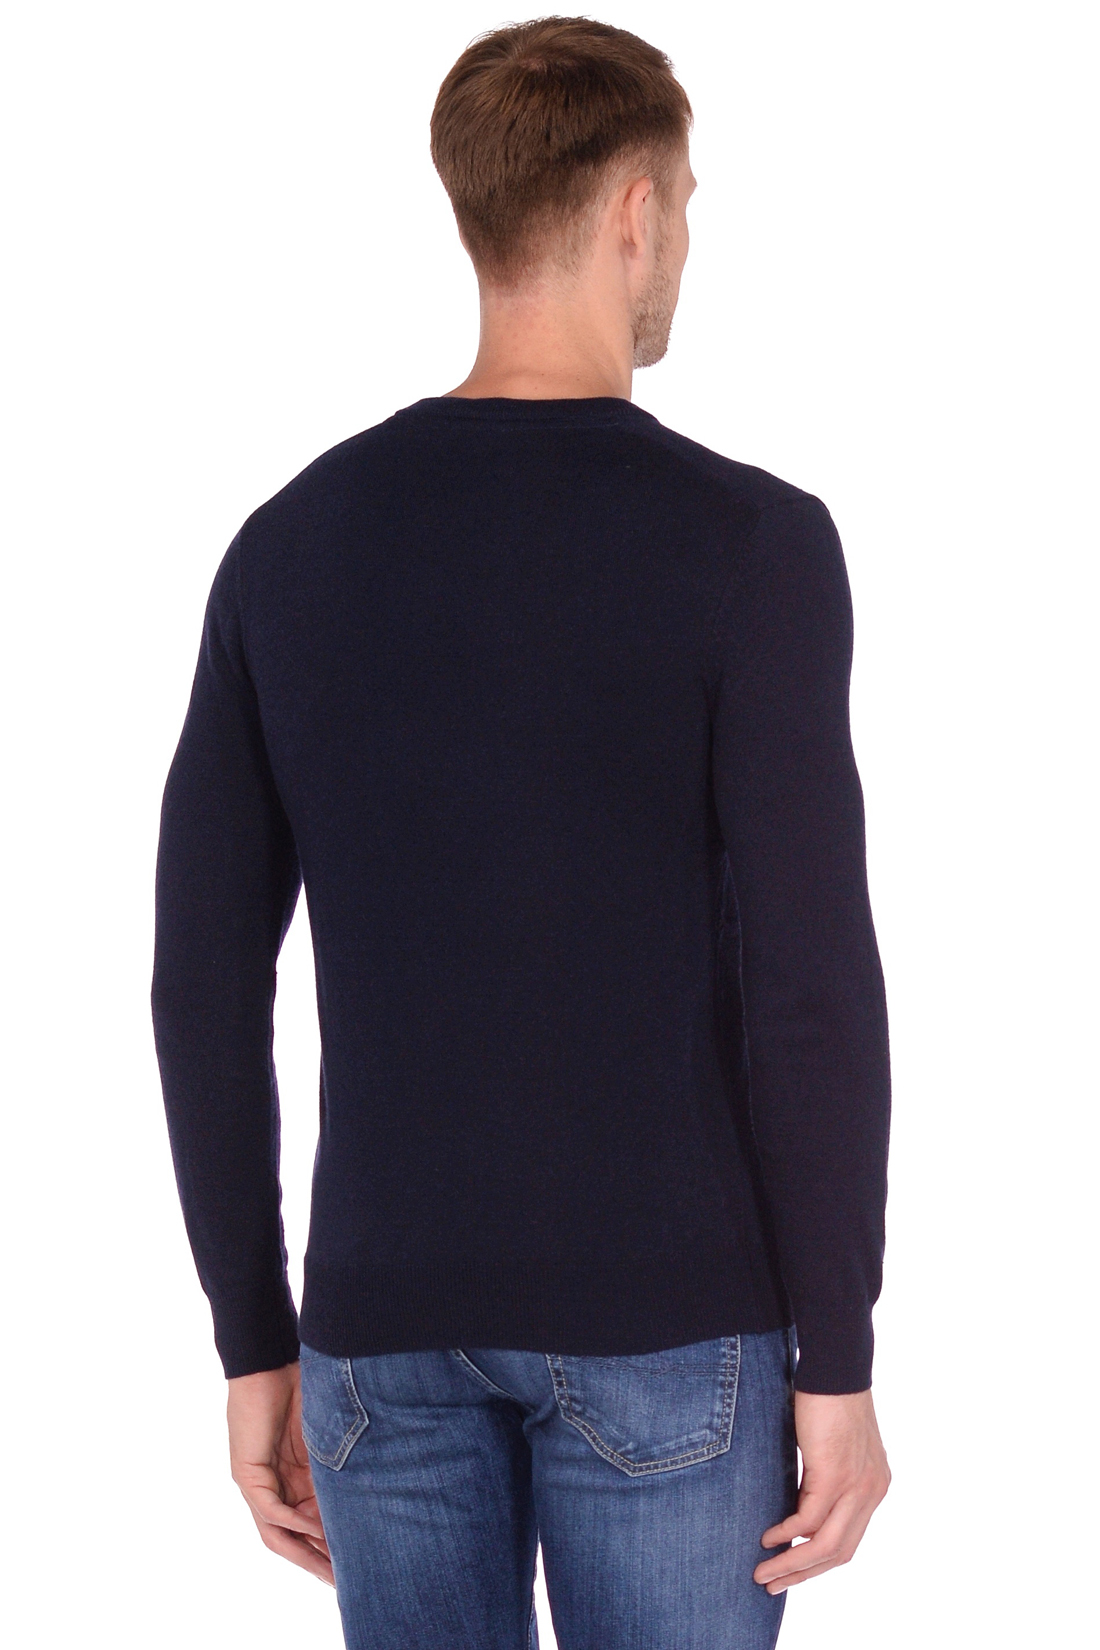 Базовый пуловер (арт. baon B638703), размер L, цвет deep navy melange#синий Базовый пуловер (арт. baon B638703) - фото 2